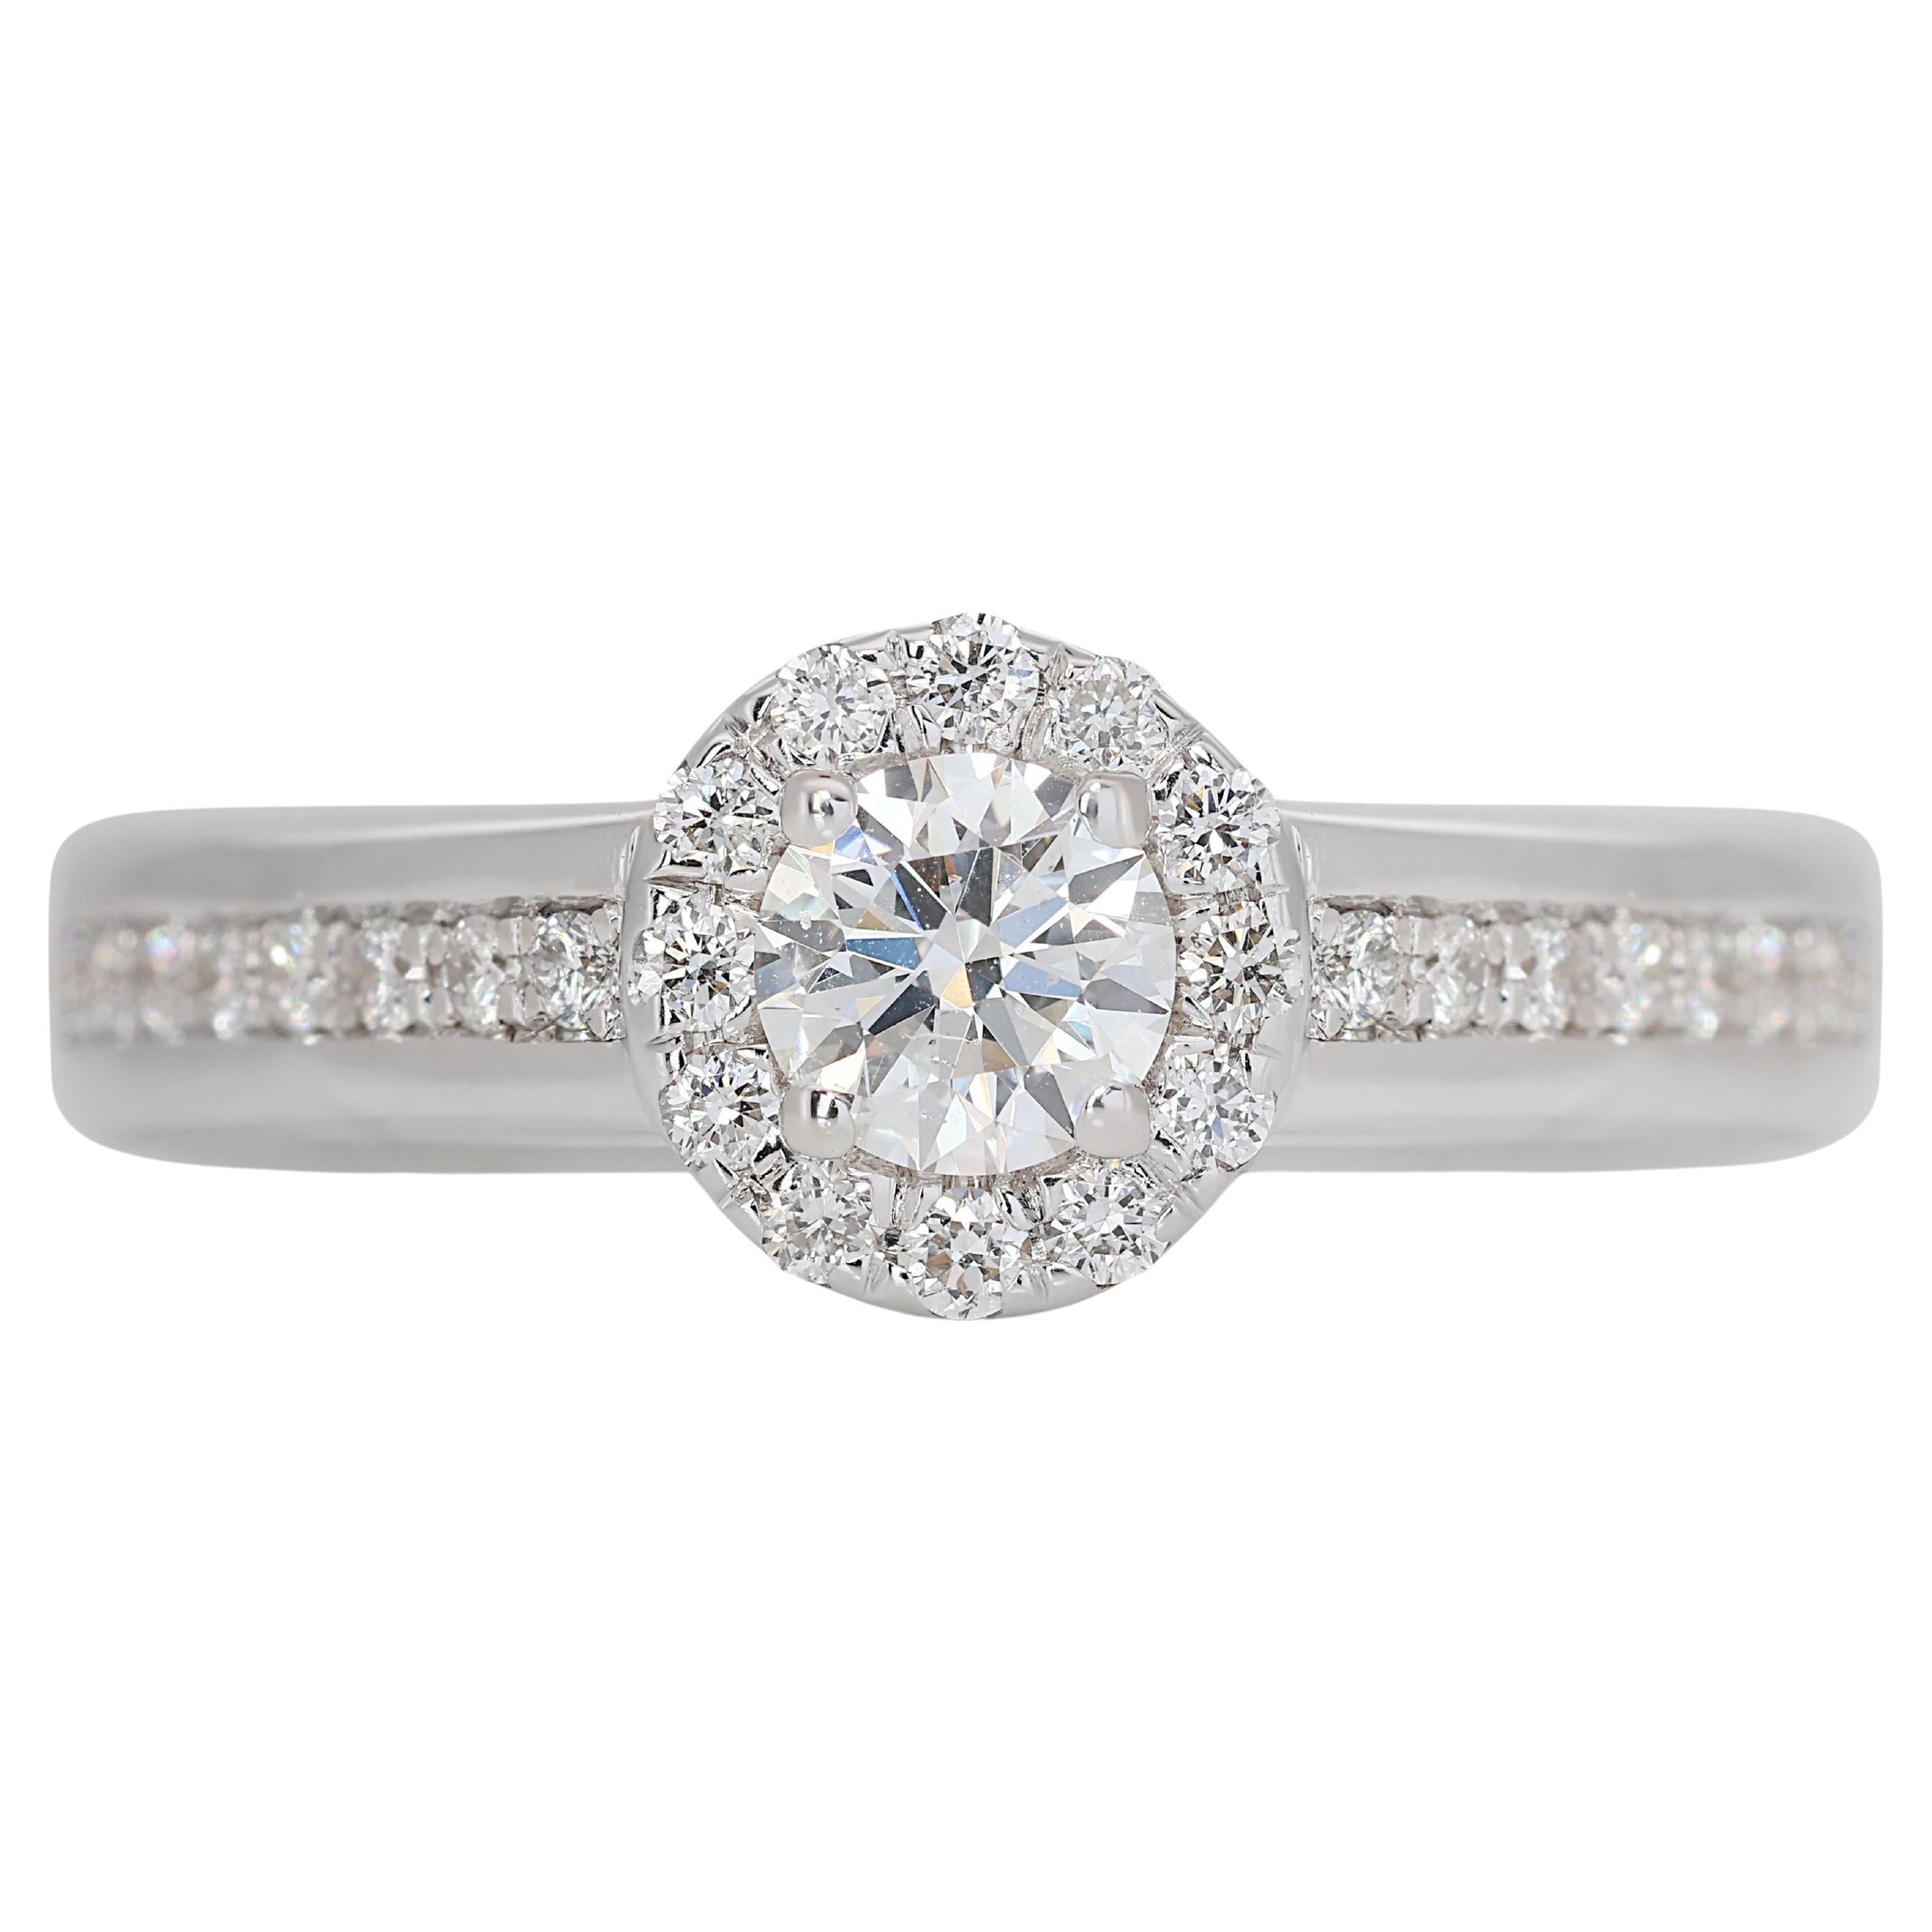 Glamorous 14k White Gold Diamond Ring with .53ct Natural Diamond